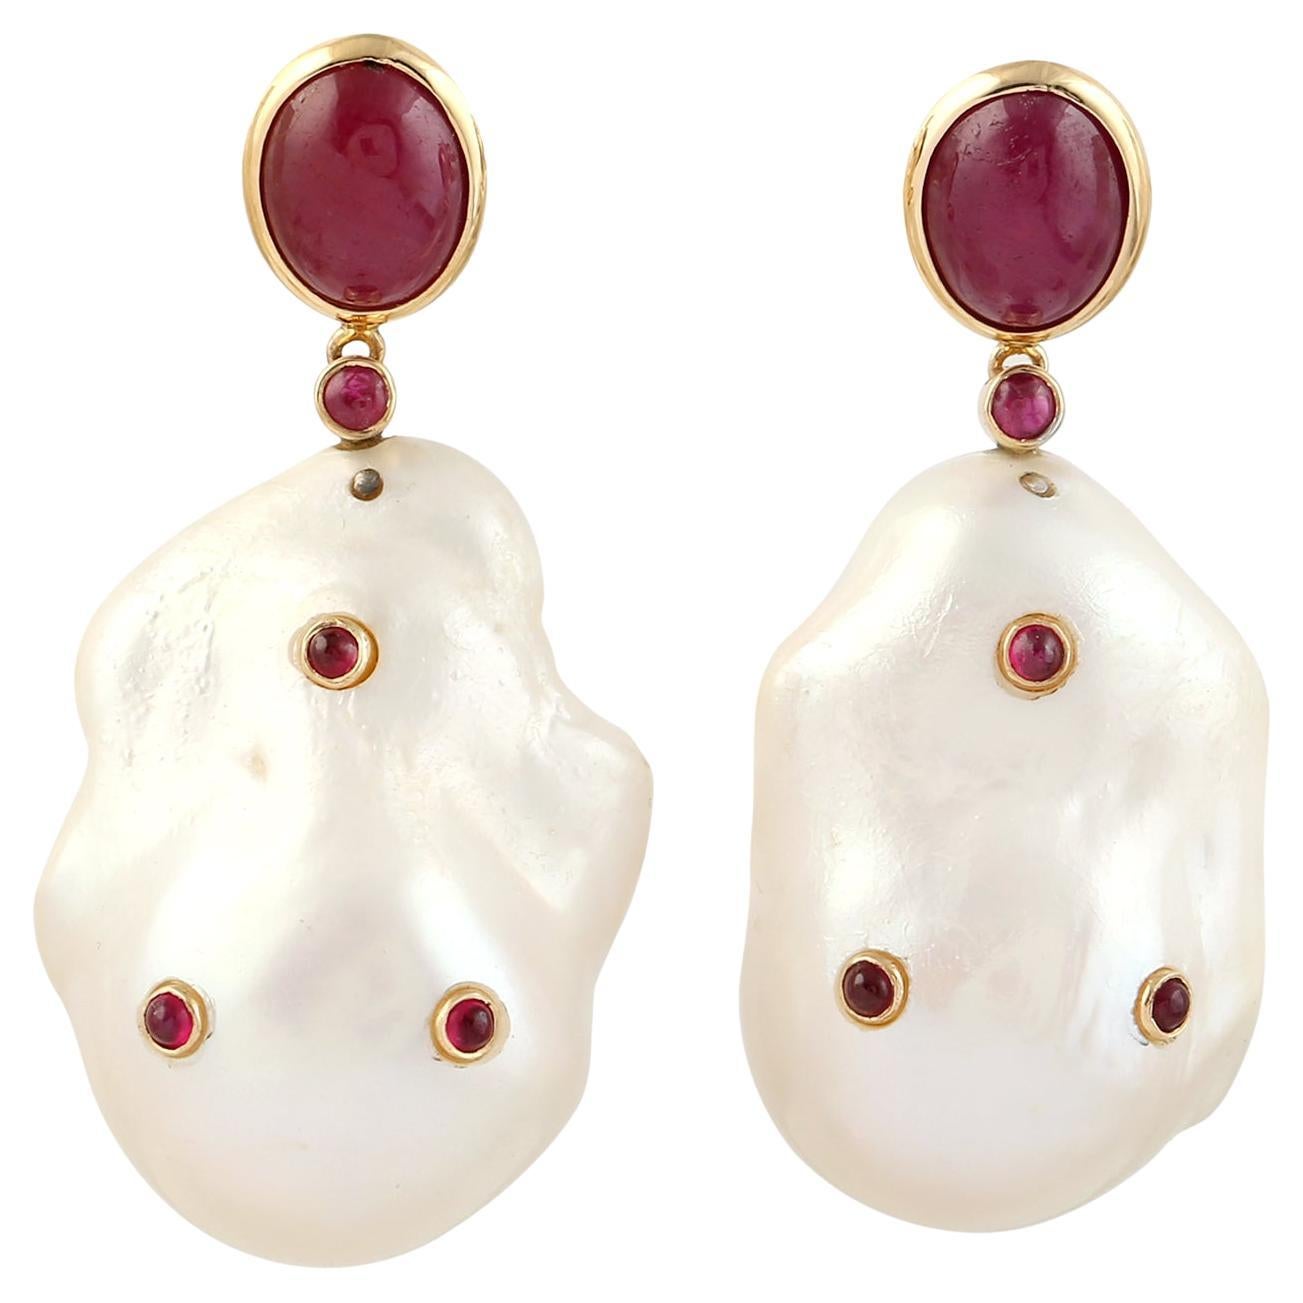 Pendants d'oreilles baroques en or 18 carats ornés de perles et de rubis